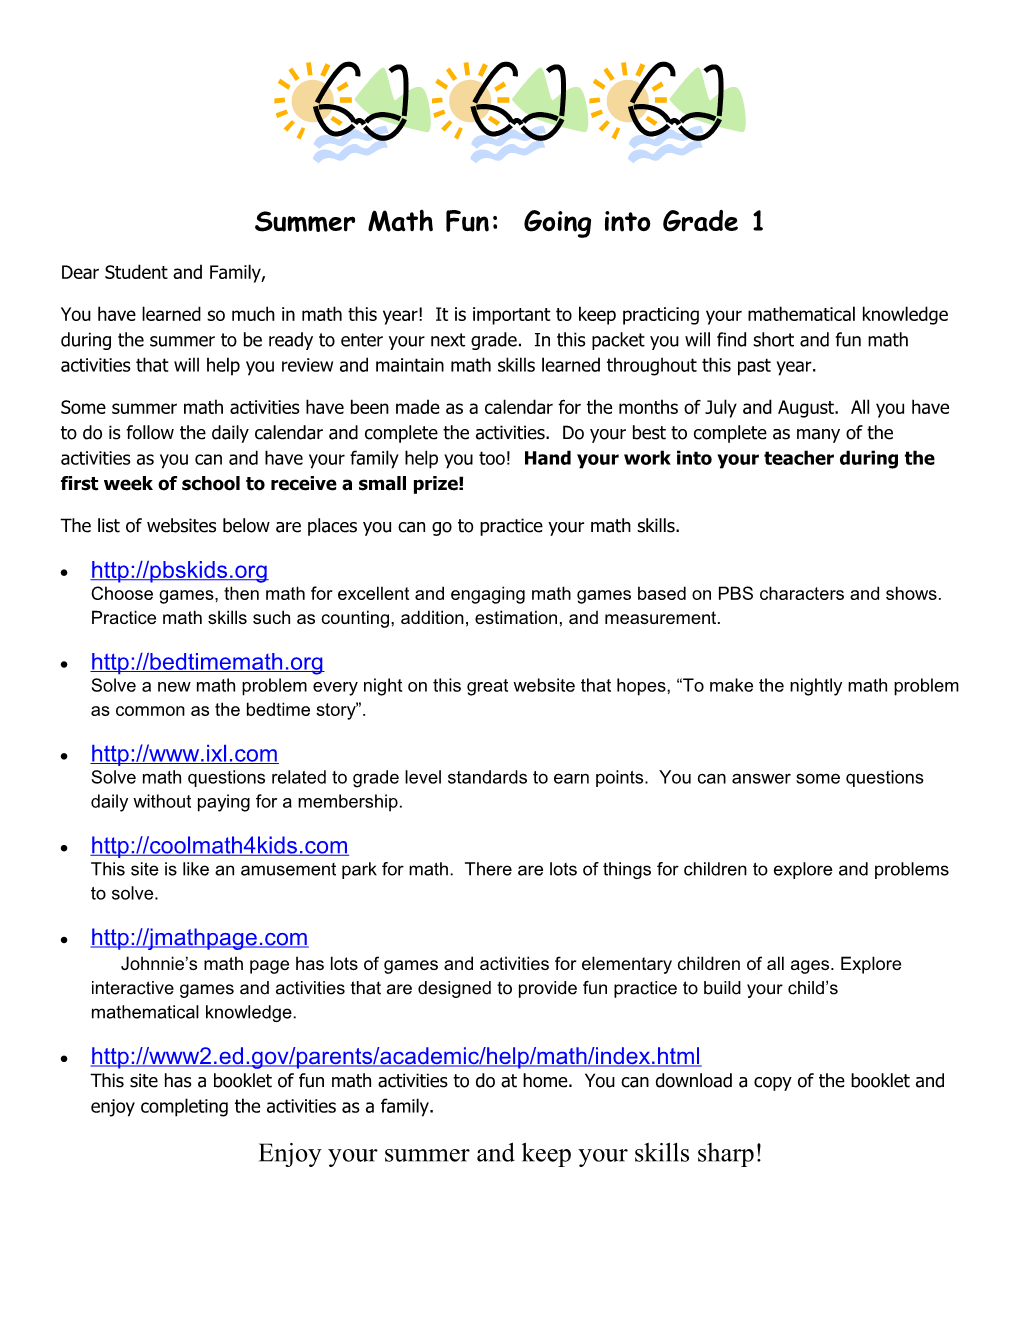 Summer Math Fun: Going Into Grade 1